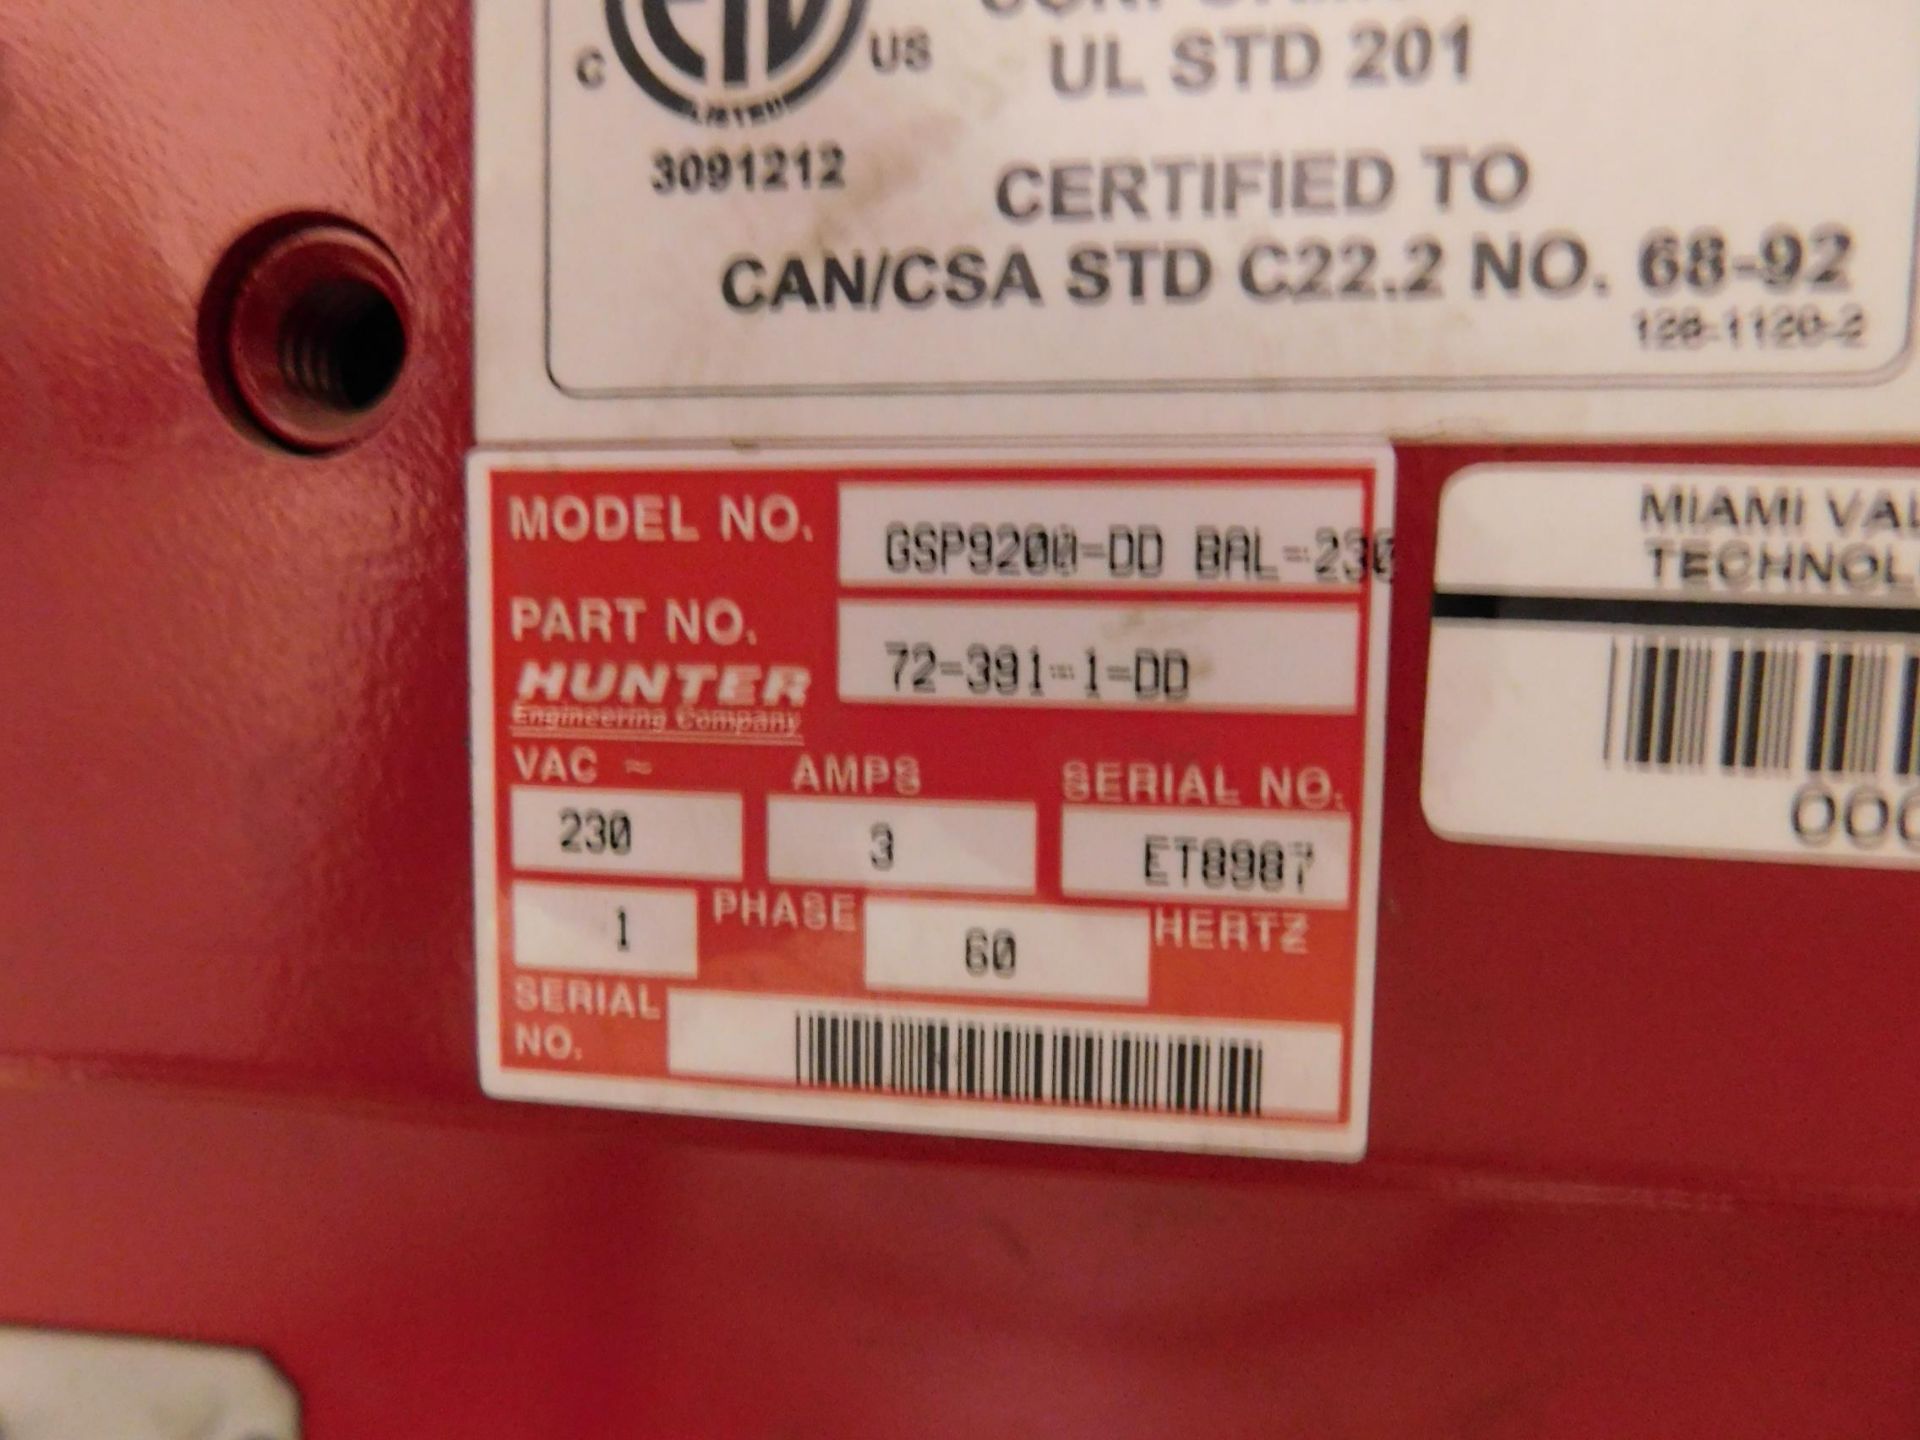 Hunter Model GSP 9200-DD BAL-230 Wheel Balancer, SN ET8987, 230V, 1 phs. - Image 5 of 5